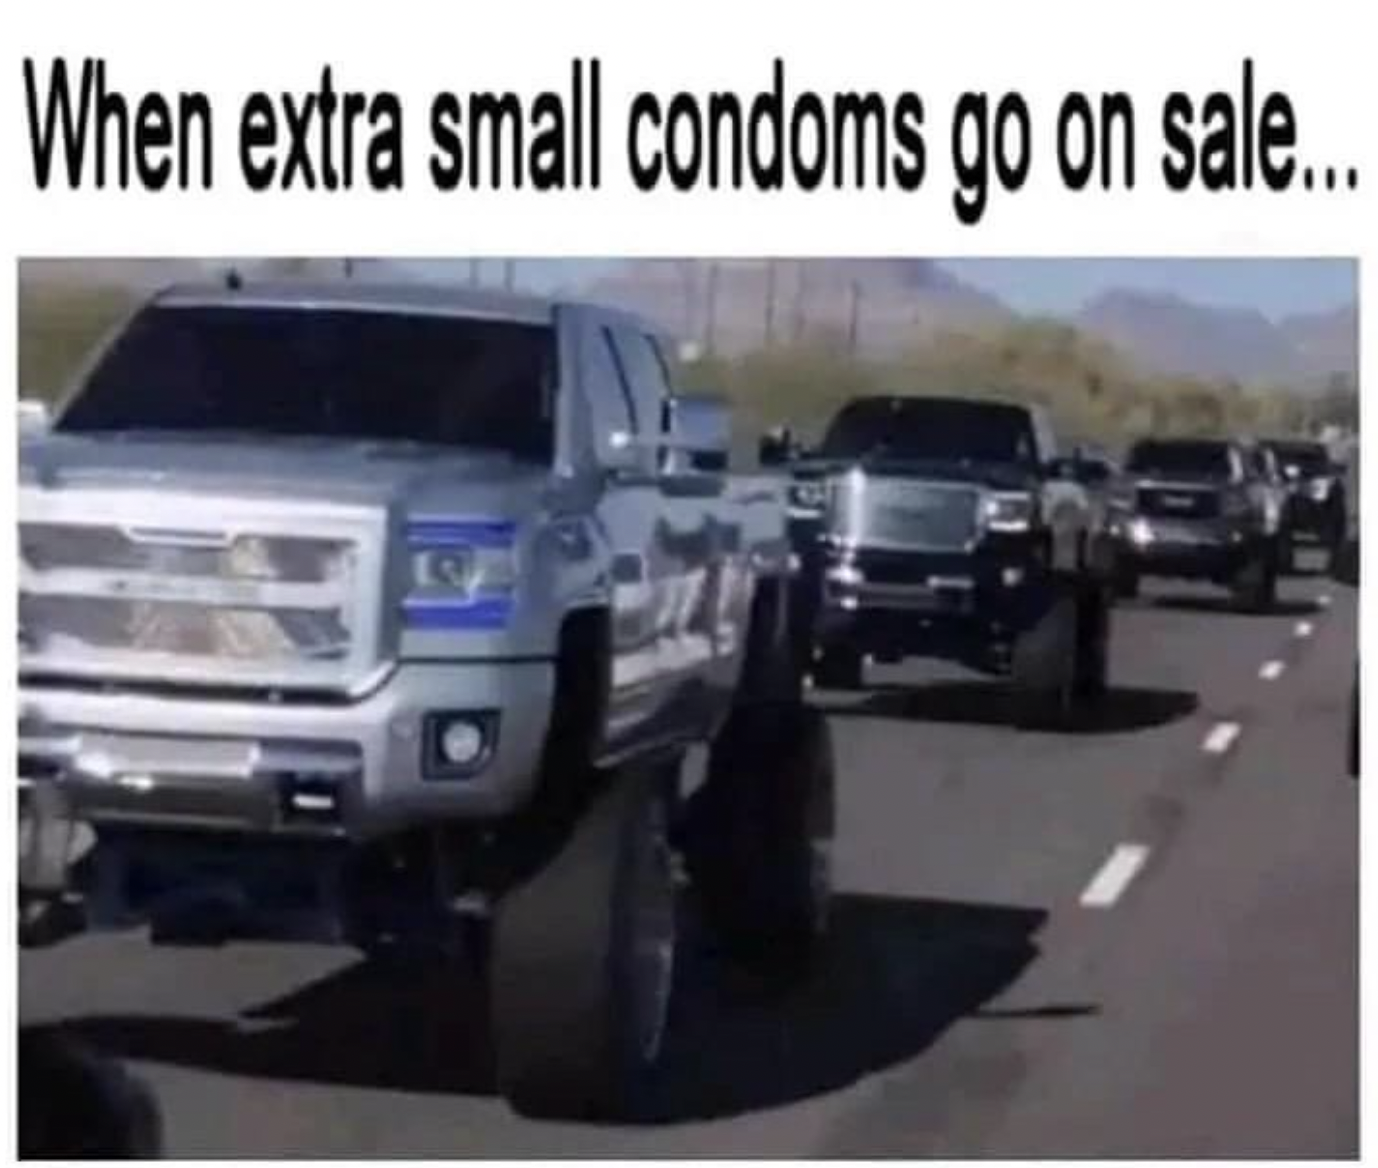 dank memes - funny memes - small condoms meme - When extra small condoms go on sale...